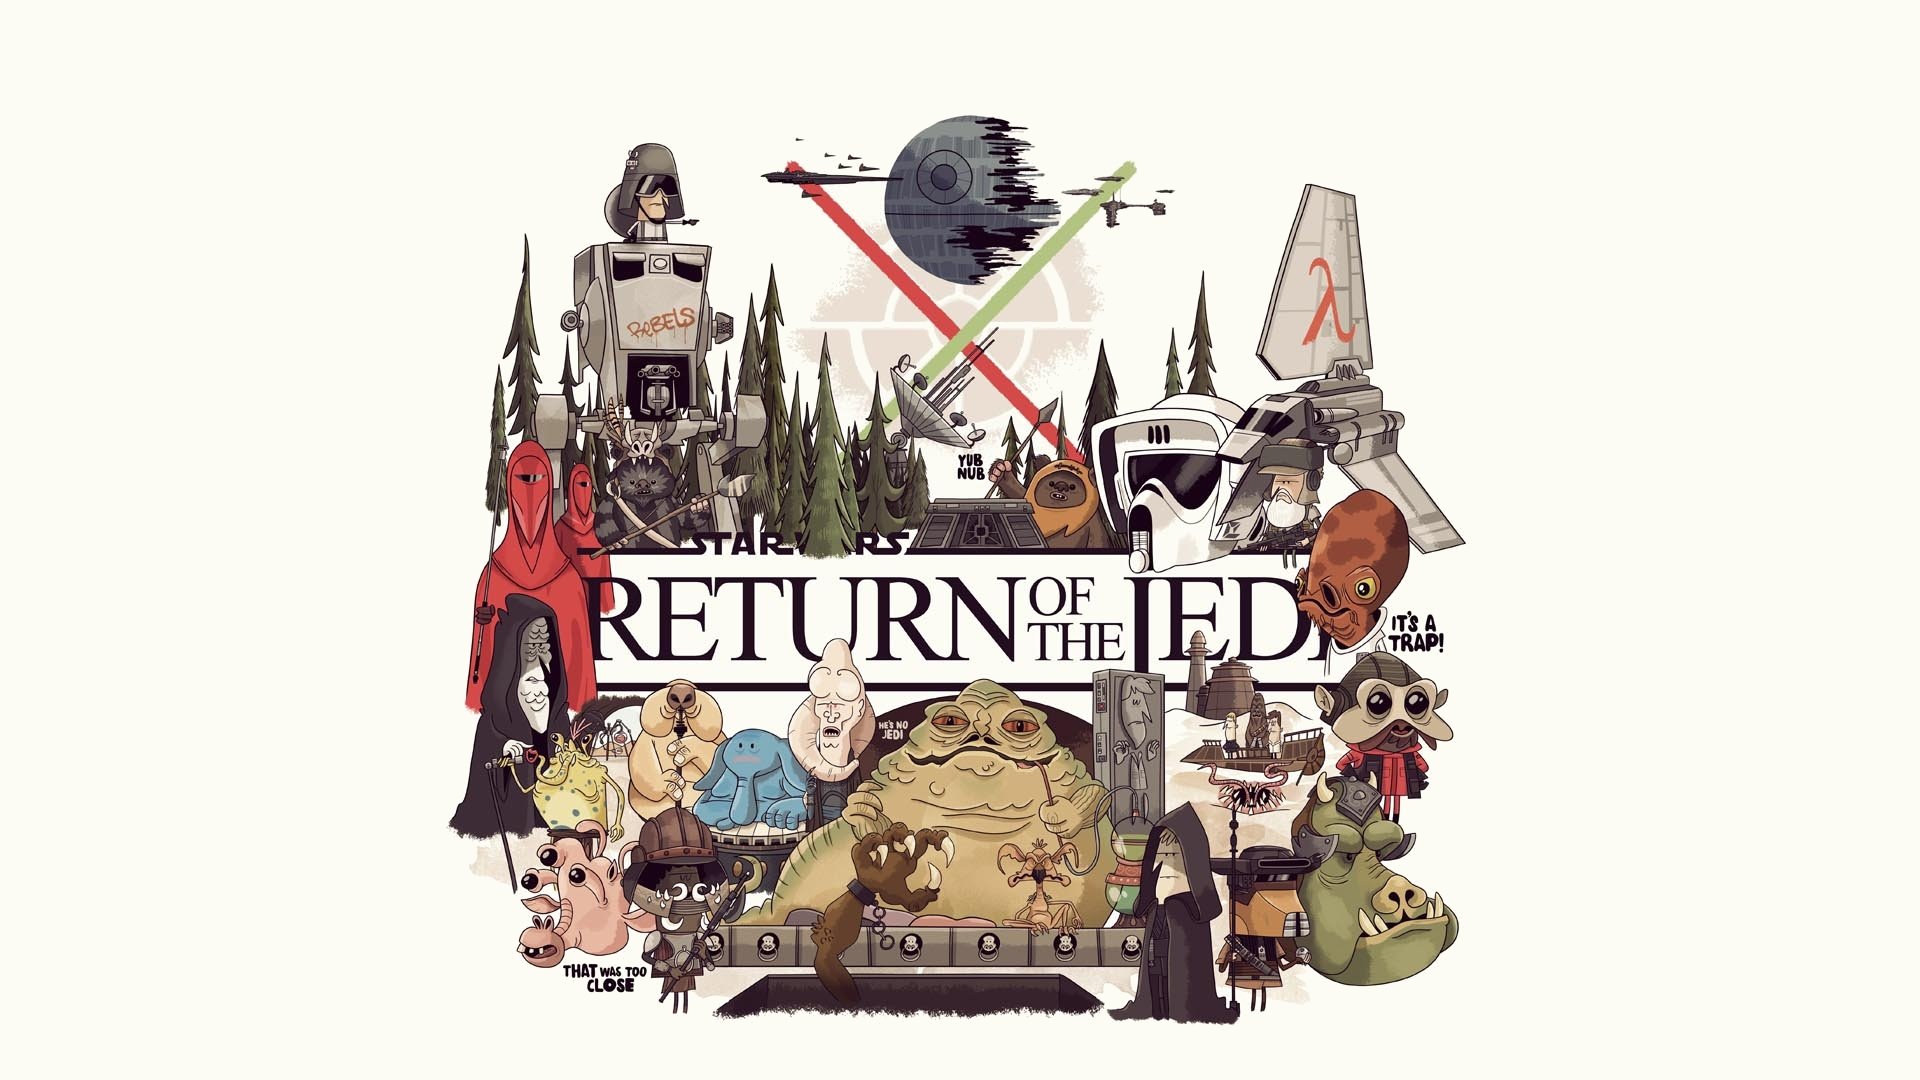 Best Star Wars Episode 6 (VI): Return Of The Jedi wallpaper ID:214797 for High Resolution hd 1920x1080 computer